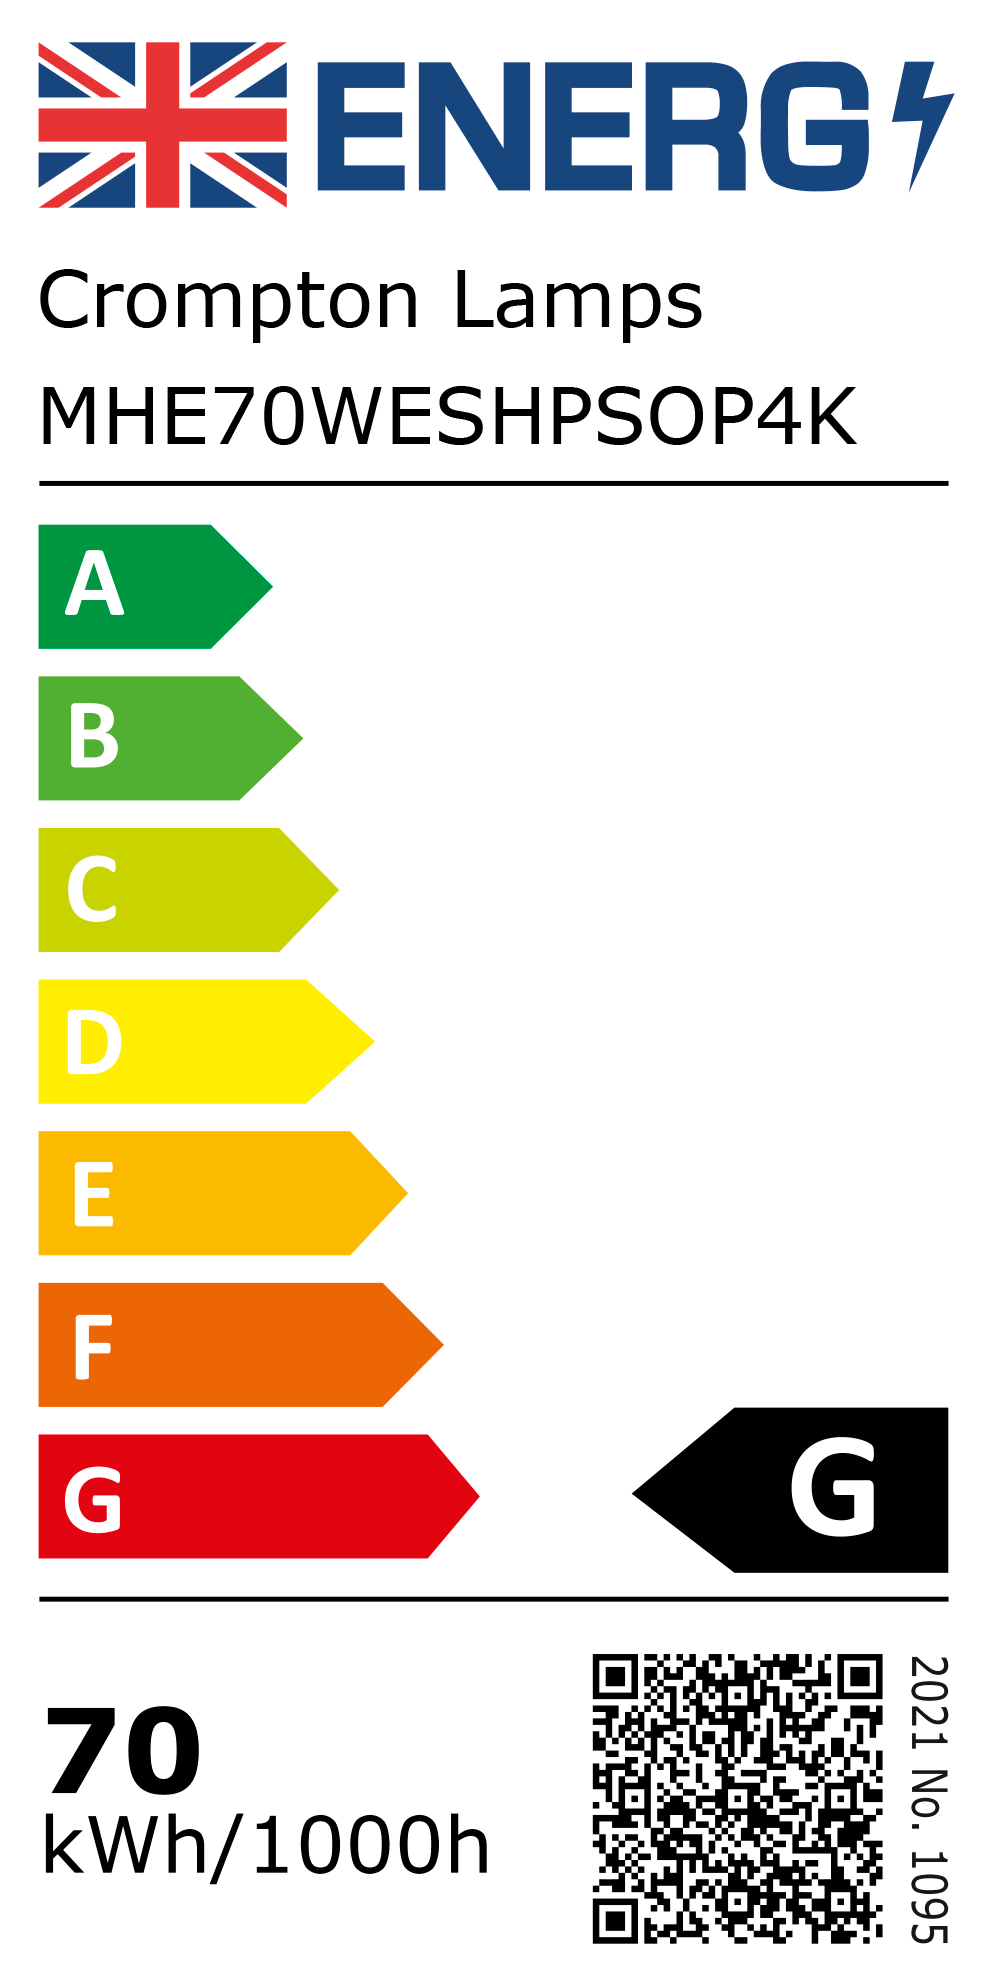 New 2021 Energy Rating Label: Stock Code MHE70WESHPSOP4K